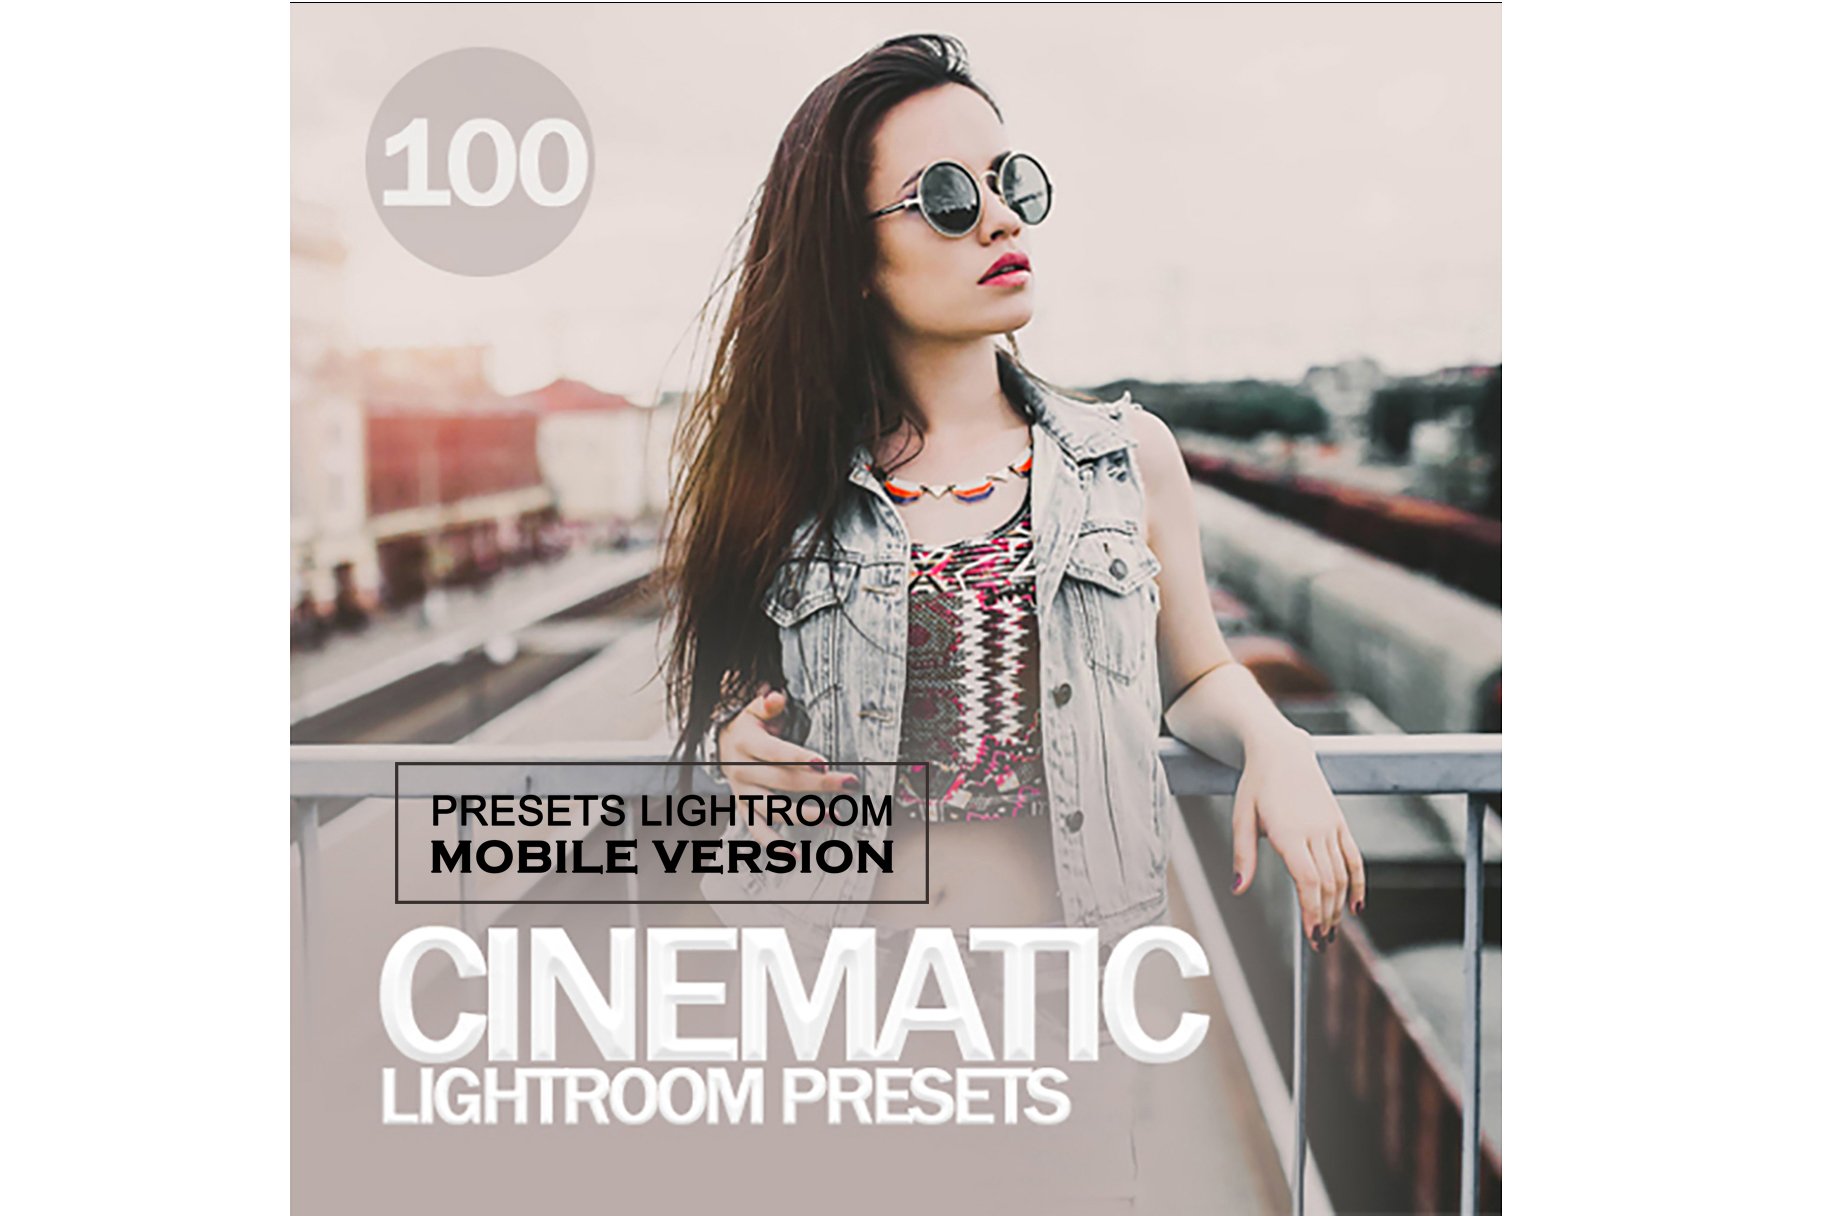 Cinematic Lightroom Mobile Presetscover image.